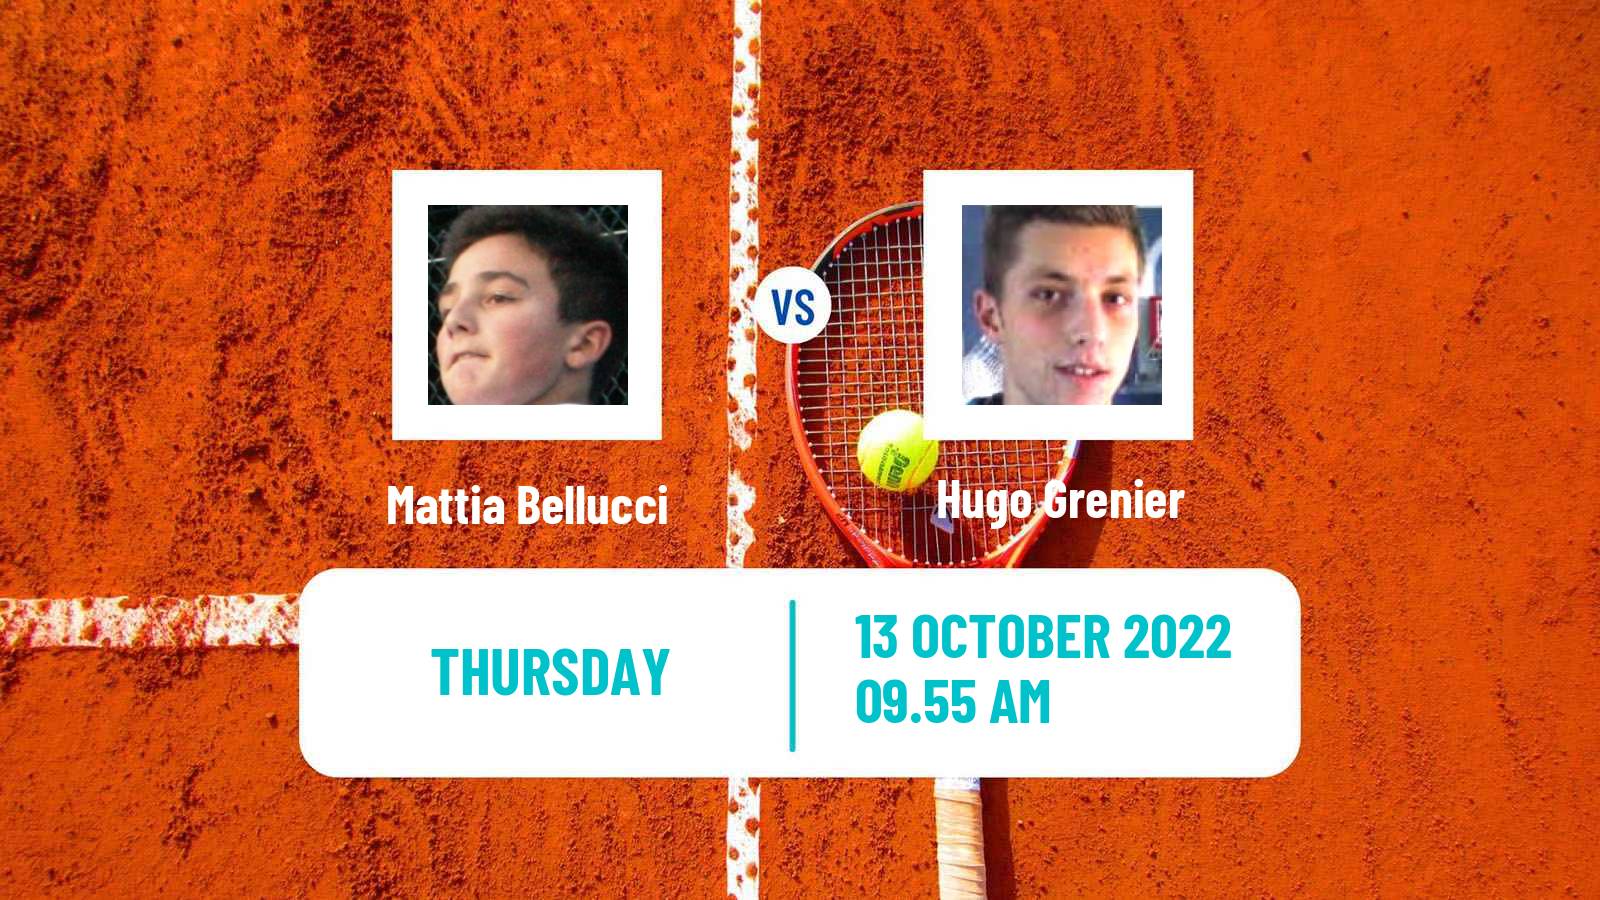 Tennis ATP Challenger Mattia Bellucci - Hugo Grenier